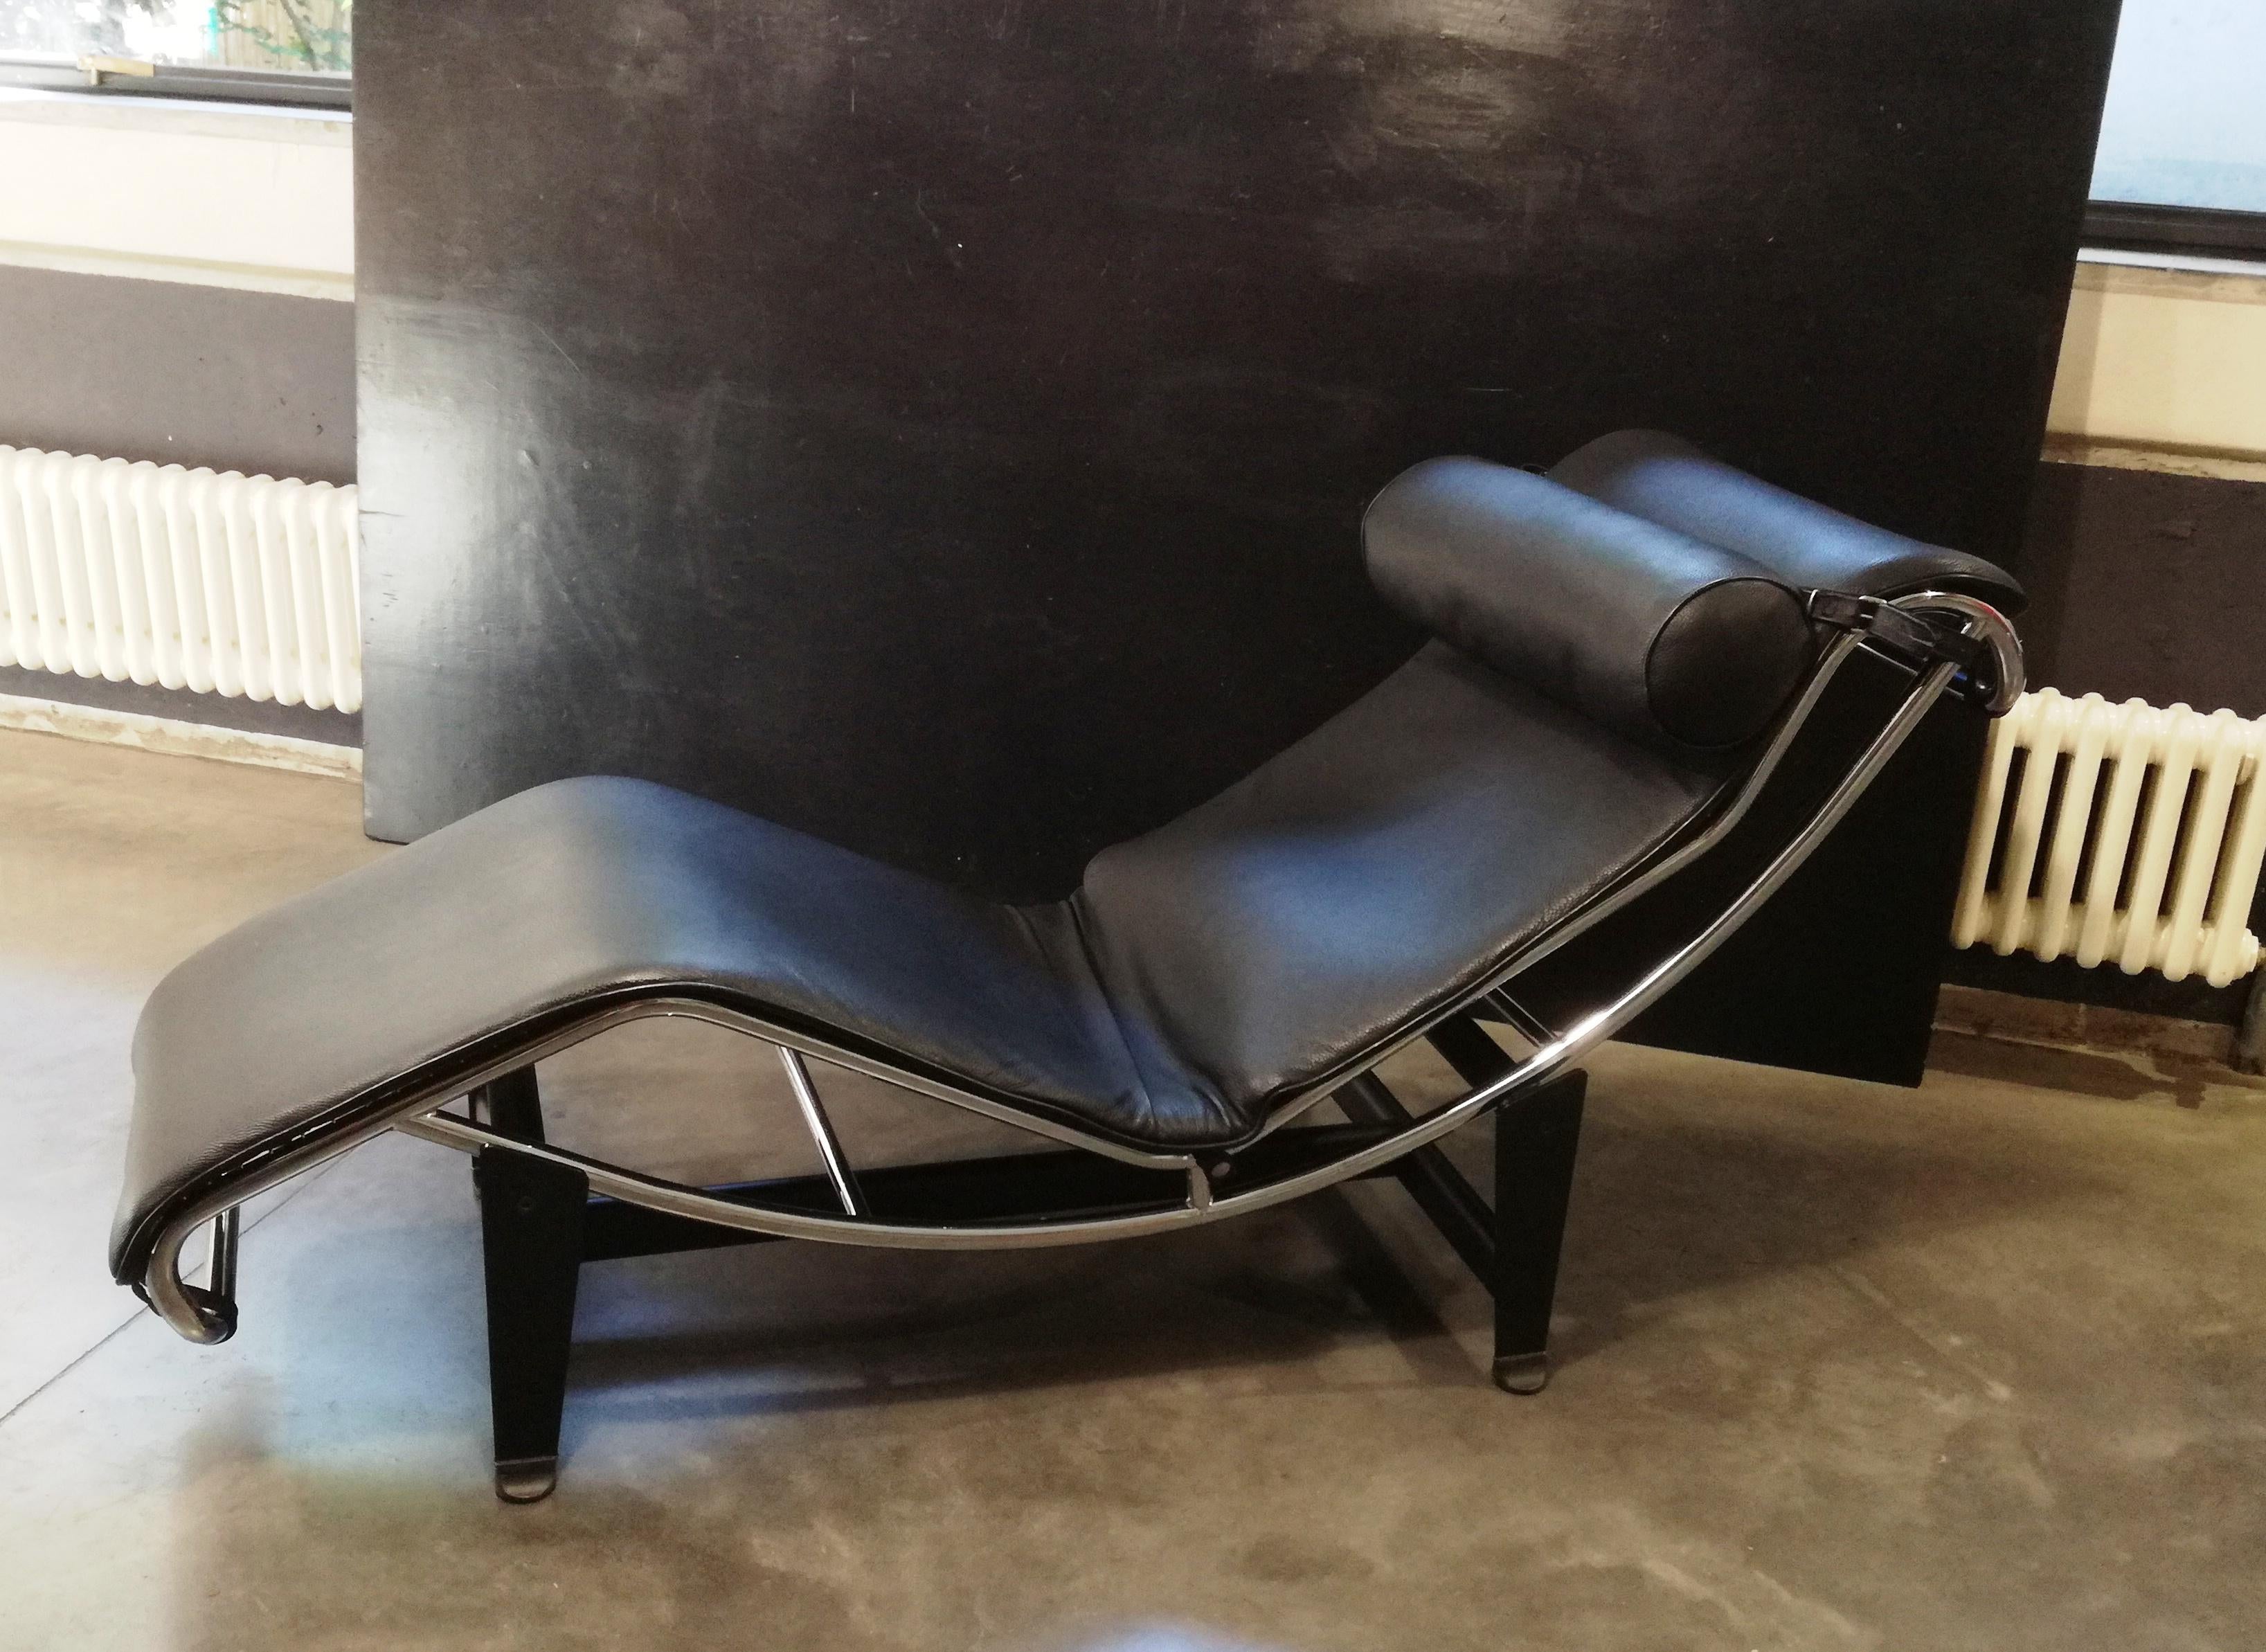 chaise loungue di ispirazione Bauhaus. basculante. produzione Alivar anni 90. usata ma bene conservata. vera pelle di qualita'.